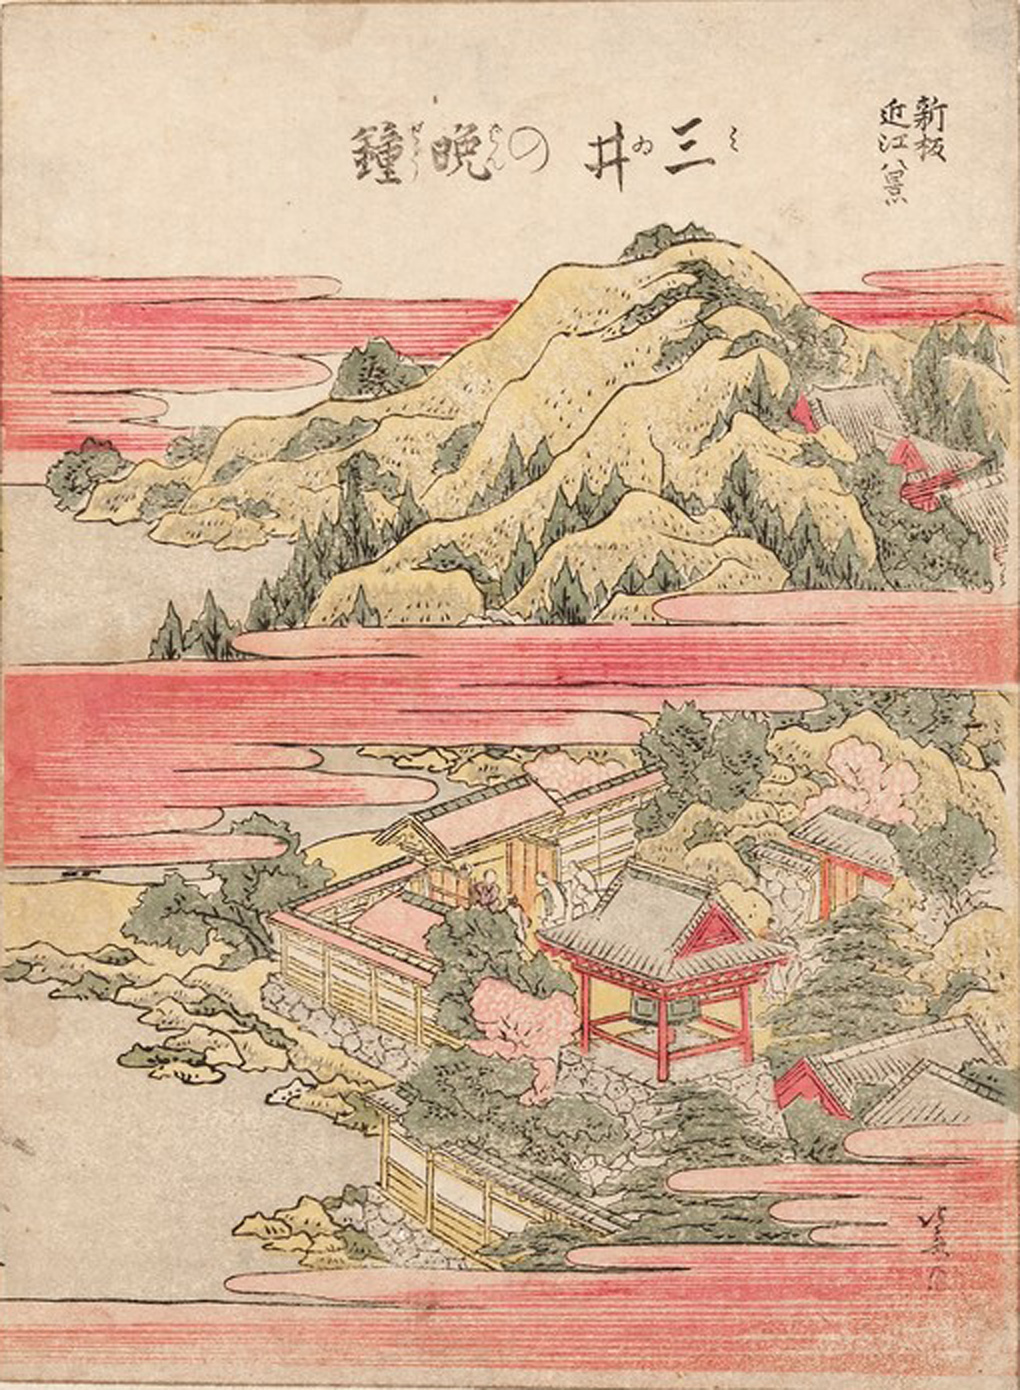 Hokusai - Evening Bell at Mii - 1802 Vertical Edition